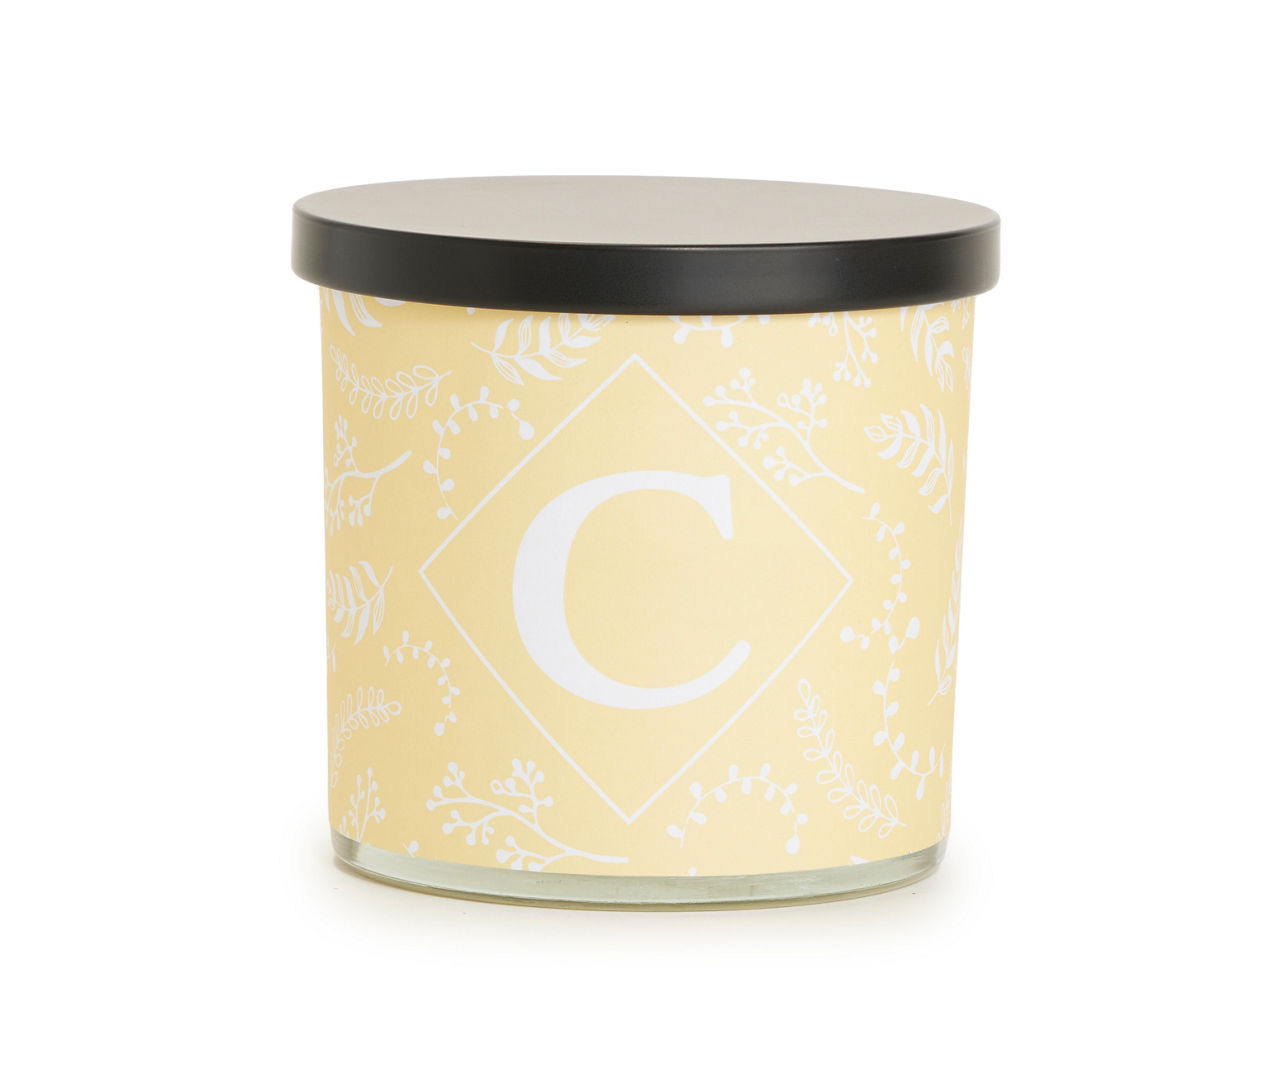 "C" Mandarin Honeysuckle Yellow & White Botanical Monogram Jar Candle, 14 oz.